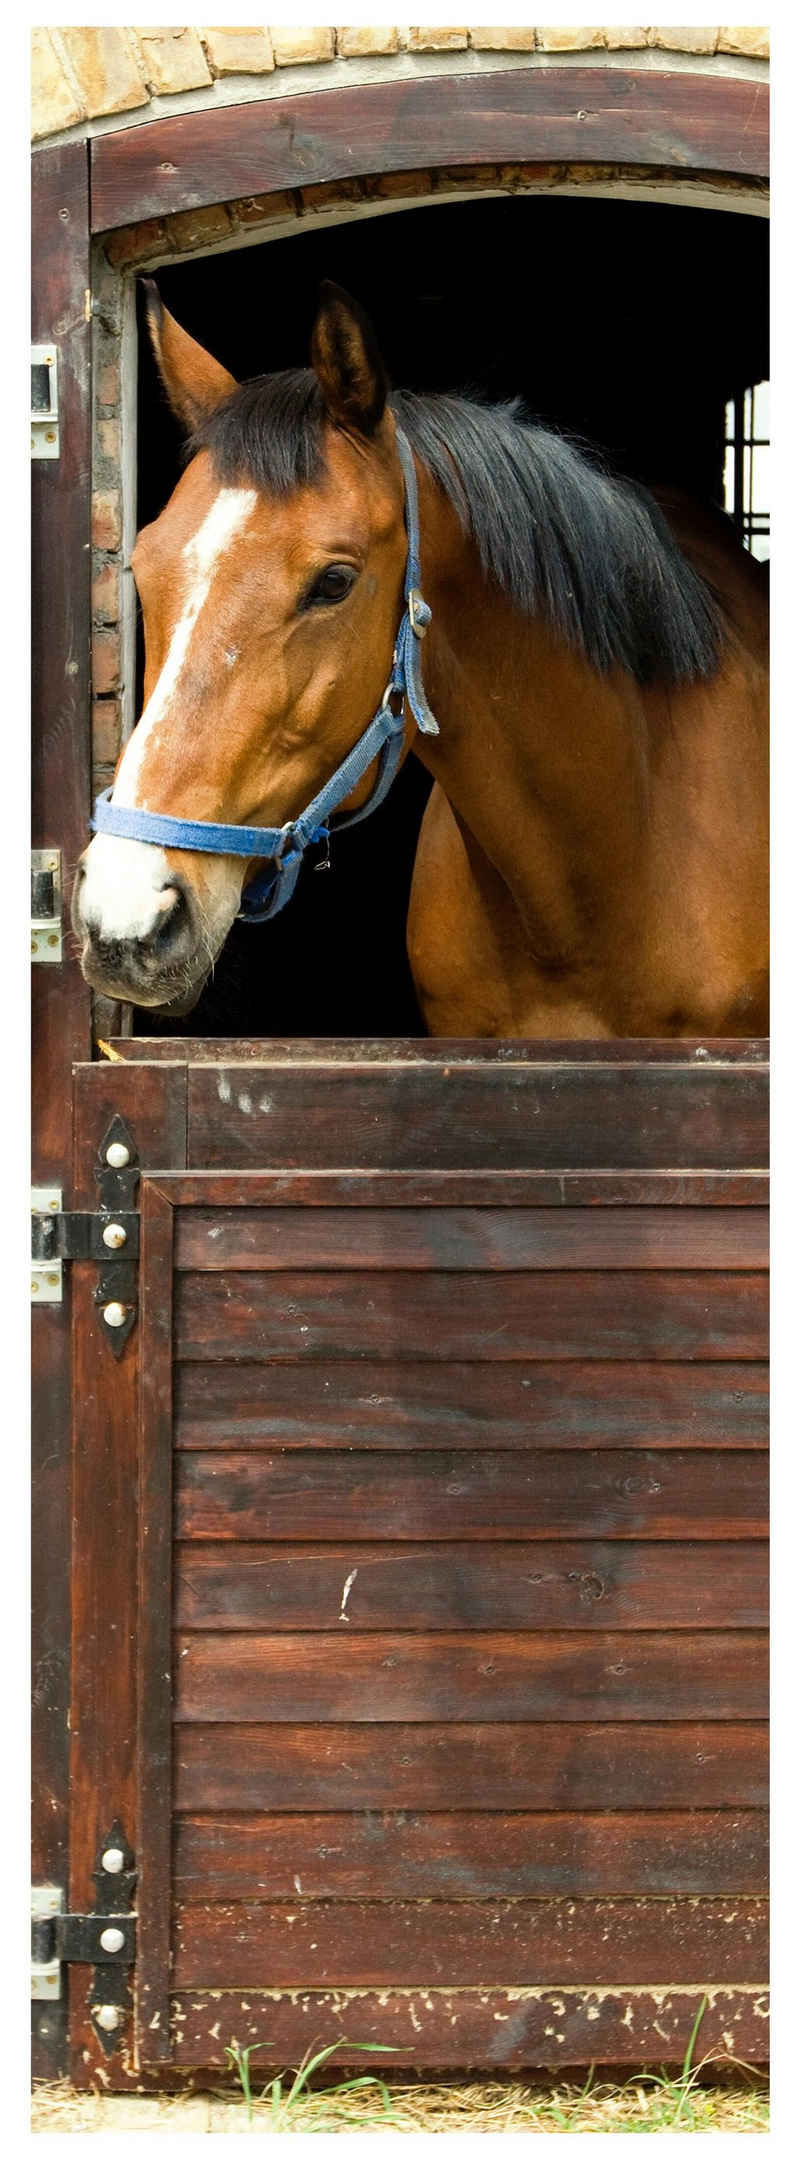 wandmotiv24 Türtapete Pferd an Stall-tür, Pferde, Tiere, Holz, glatt, Fototapete, Wandtapete, Motivtapete, matt, selbstklebende Dekorfolie